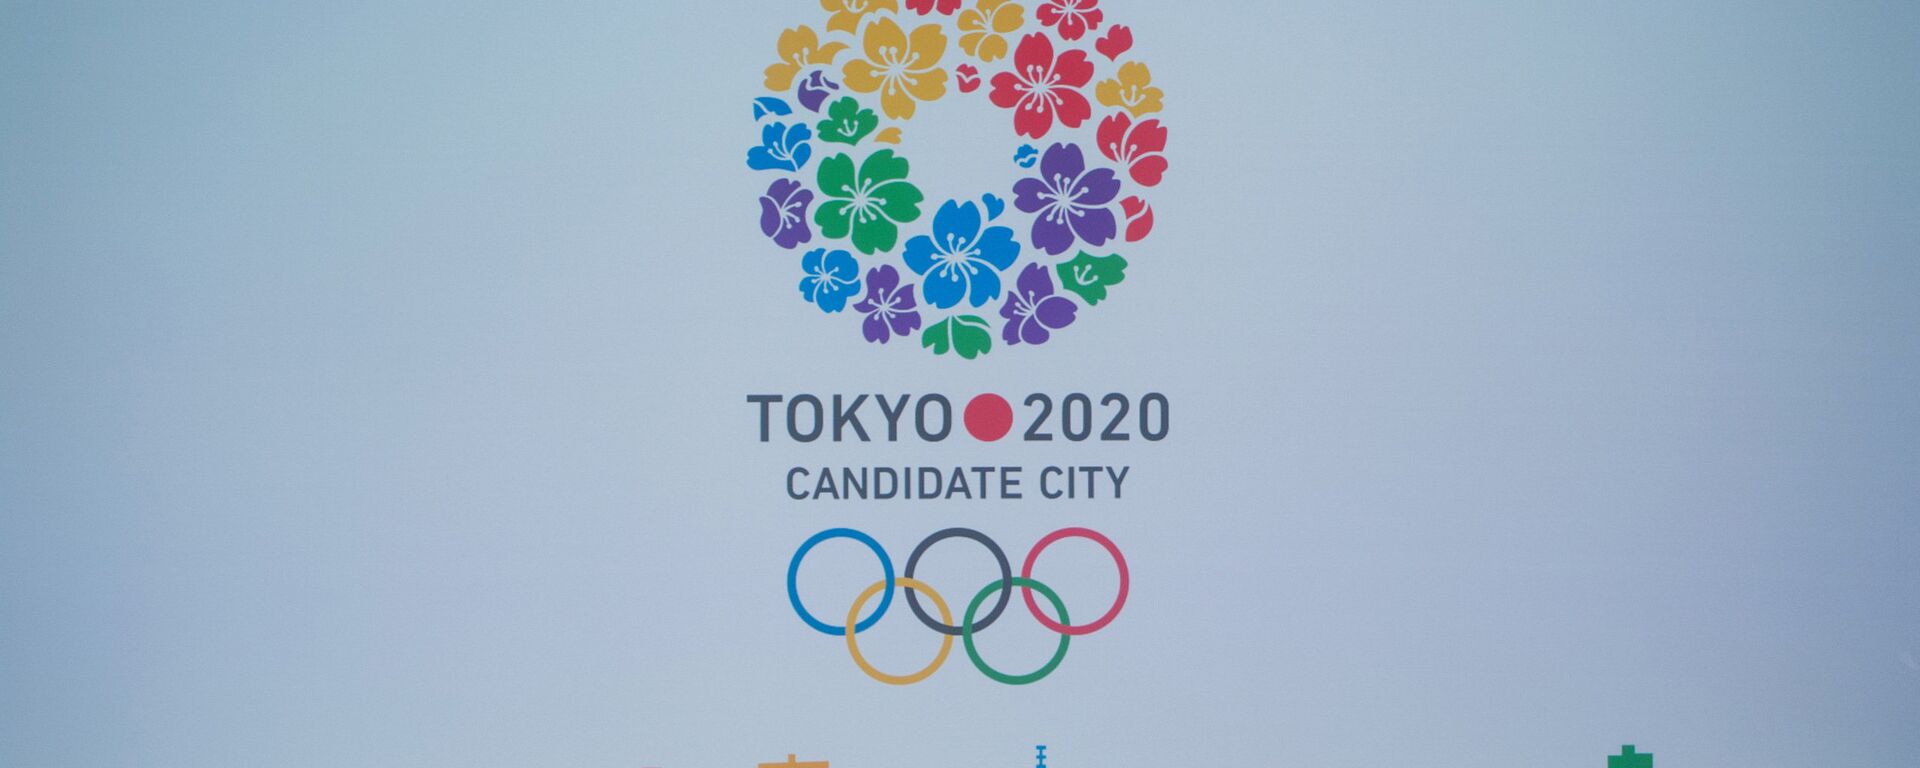 Символика Олимпиады в Токио 2020, архивное фото - Sputnik Таджикистан, 1920, 22.07.2020